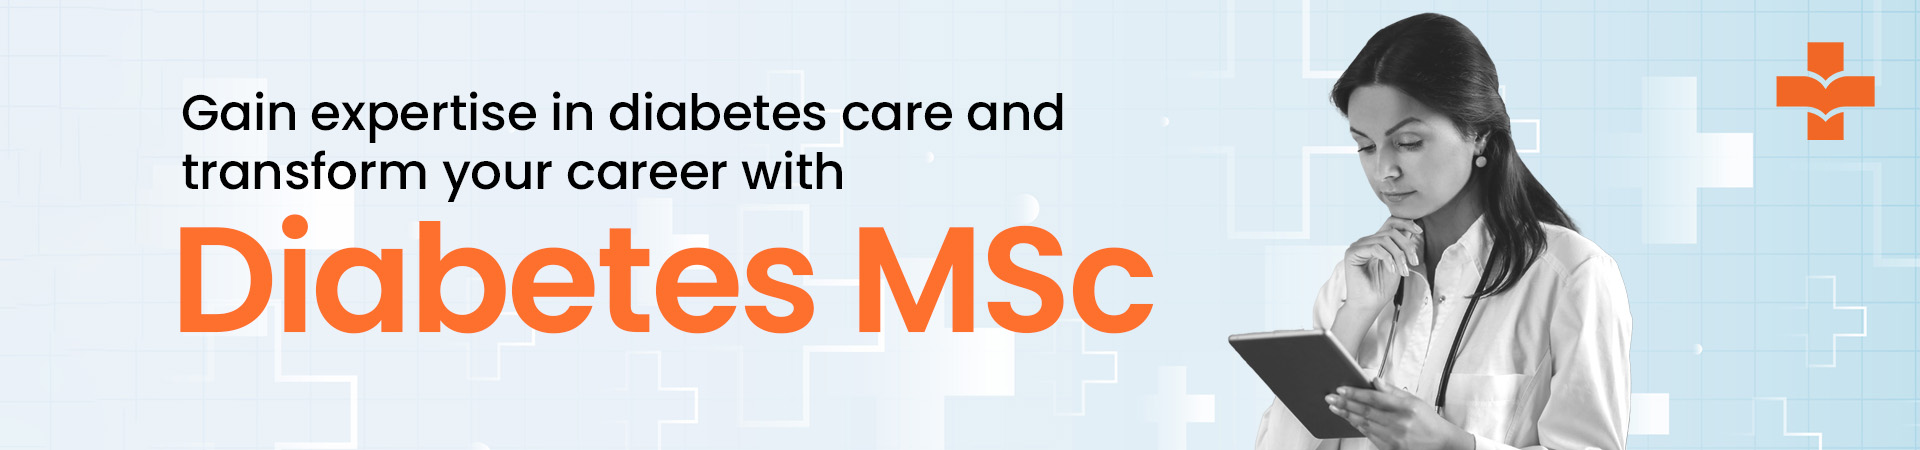 Diabetes MSc online course by medvarsity